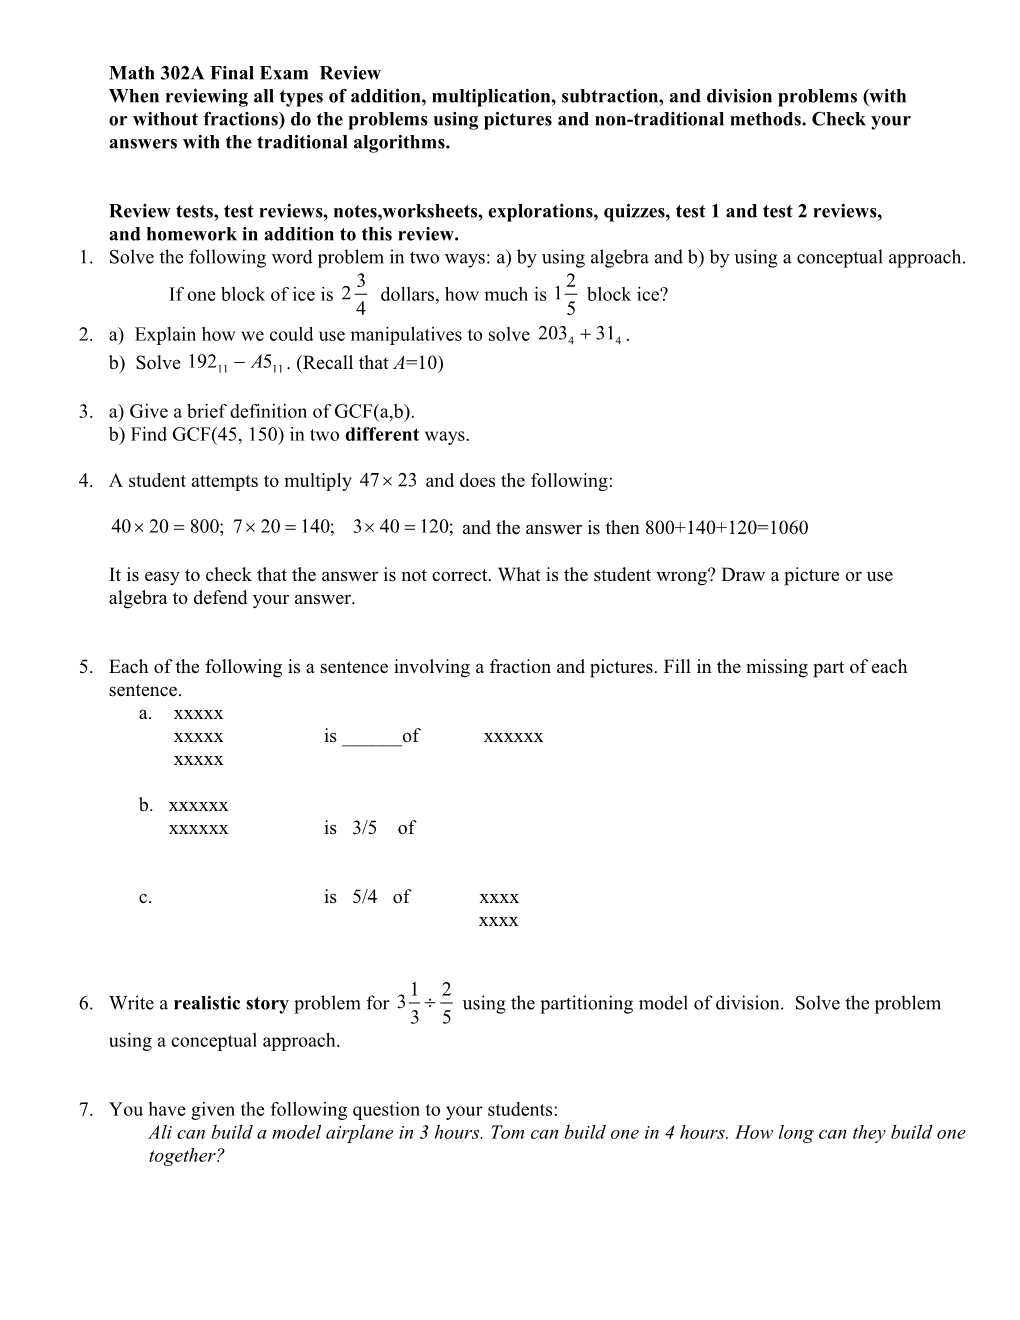 Math 302Afinal Exam Review